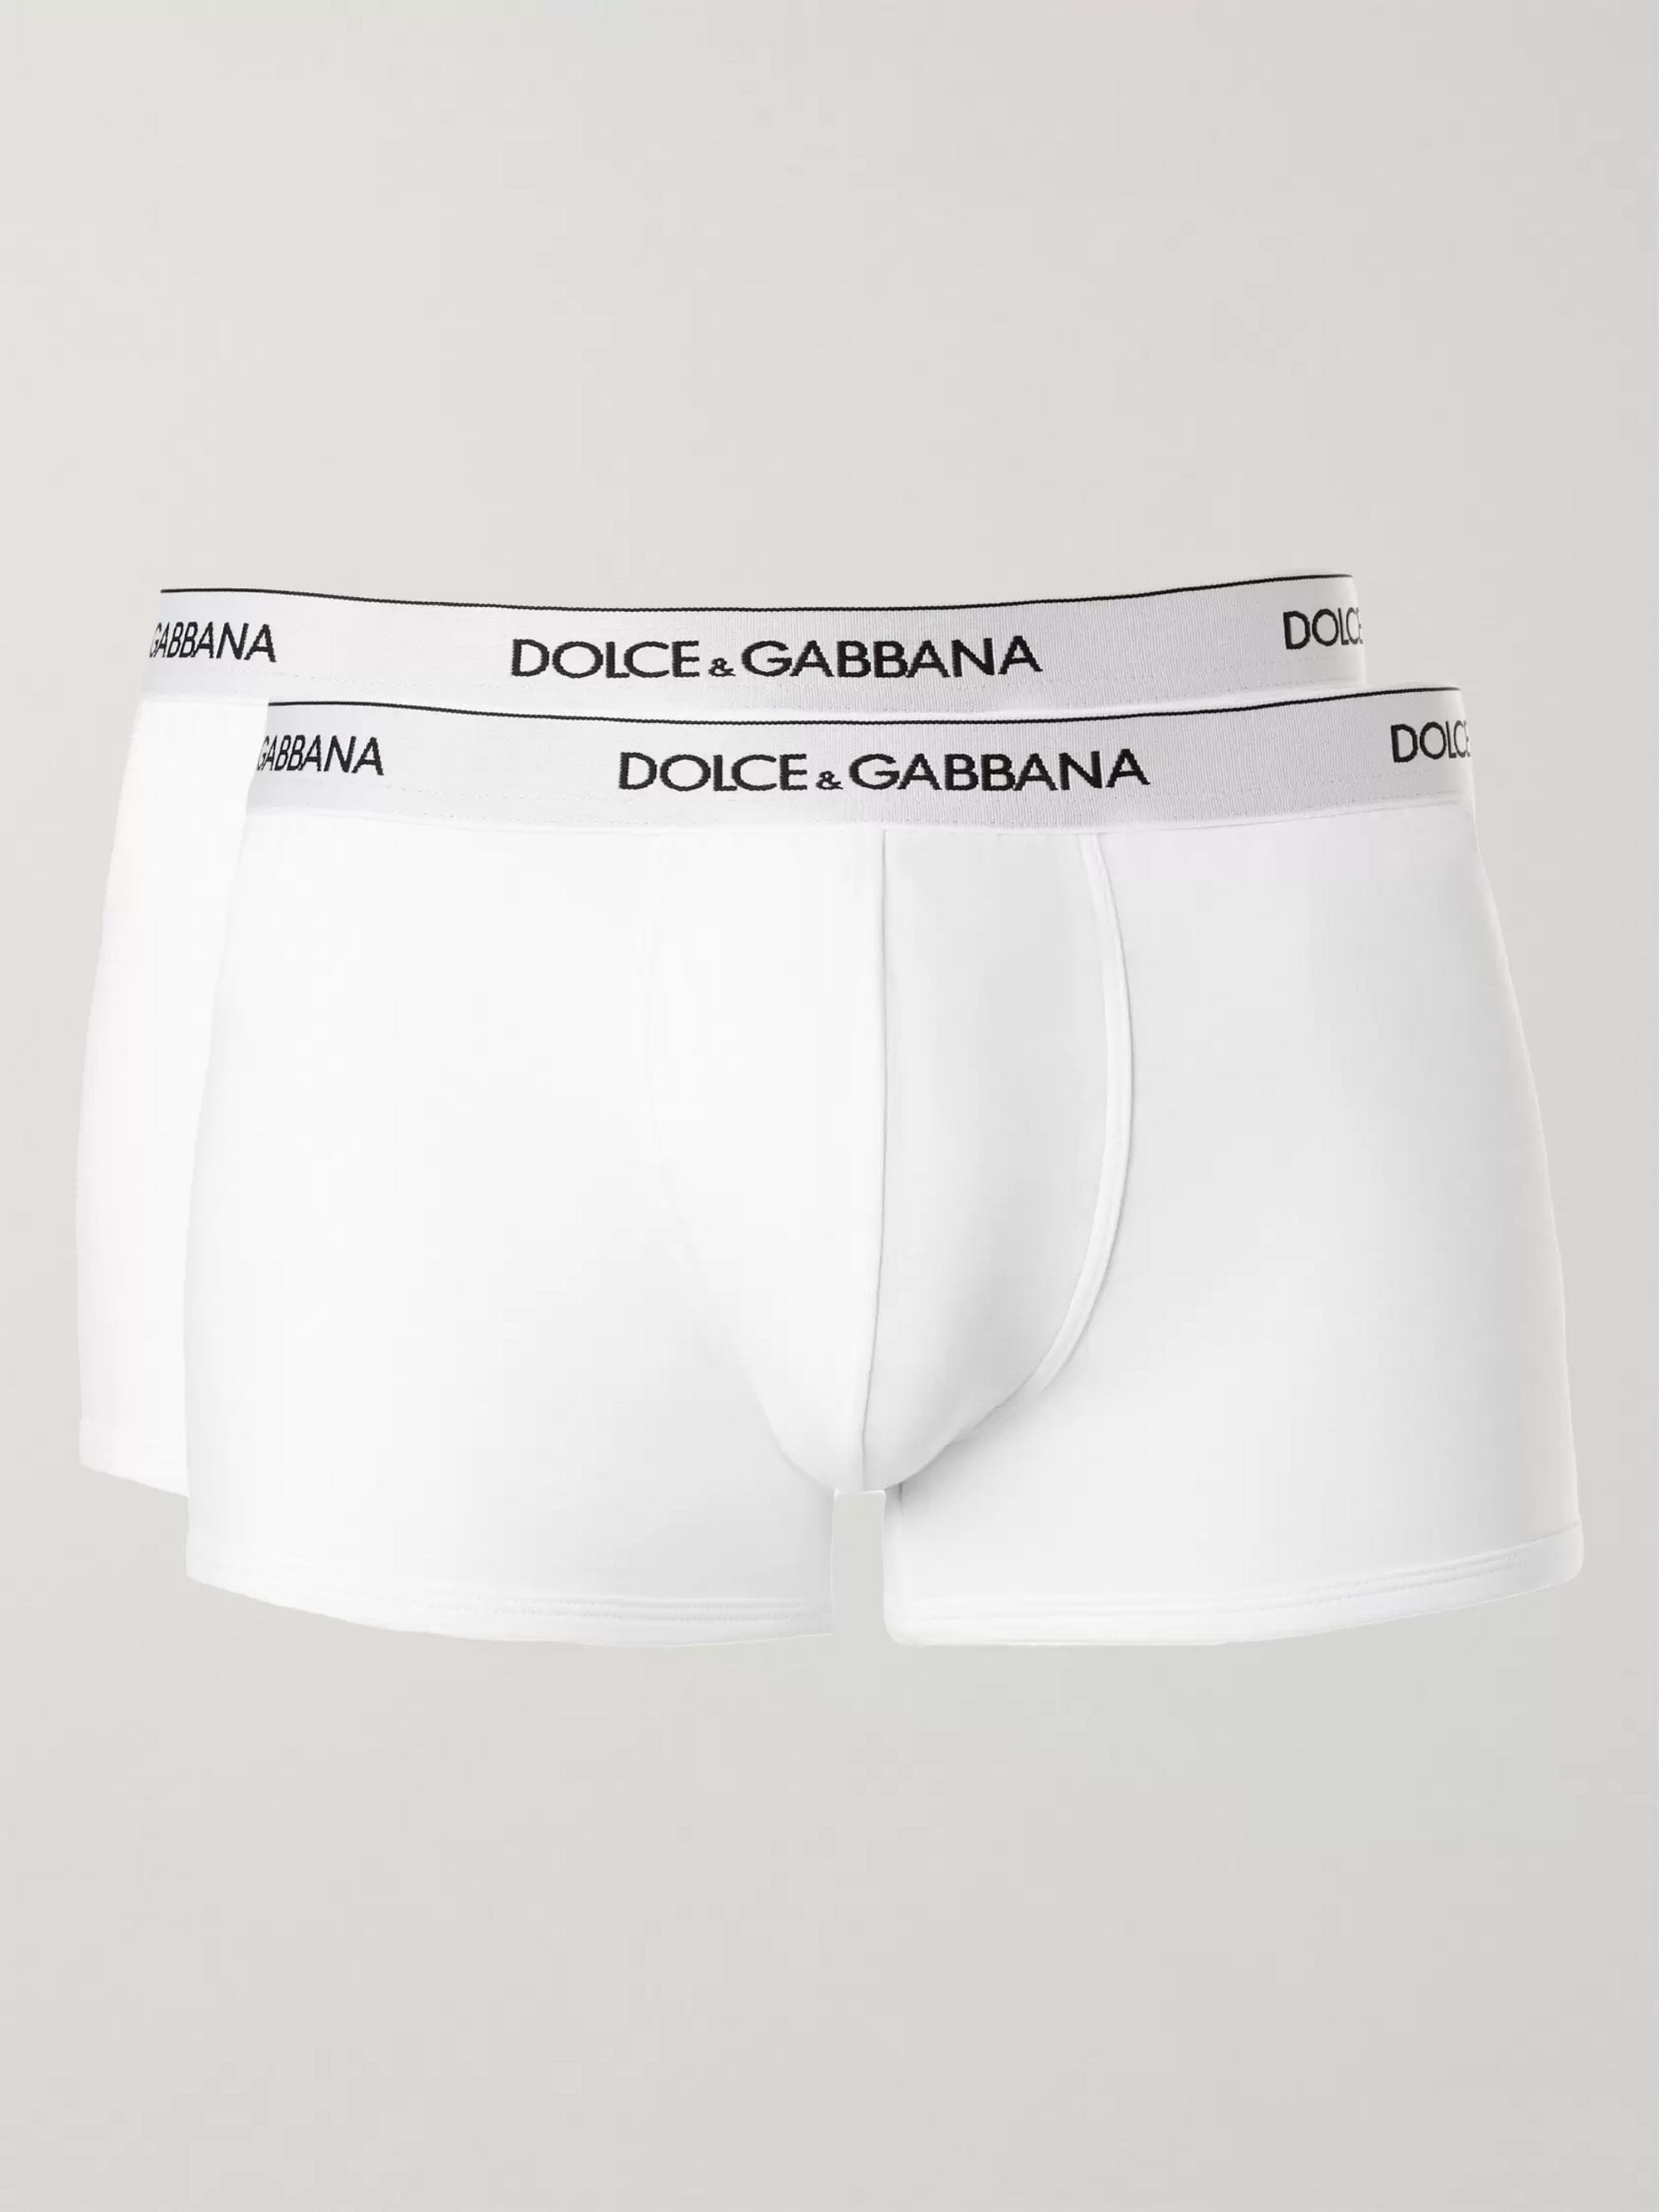 dolce and gabbana boxer shorts